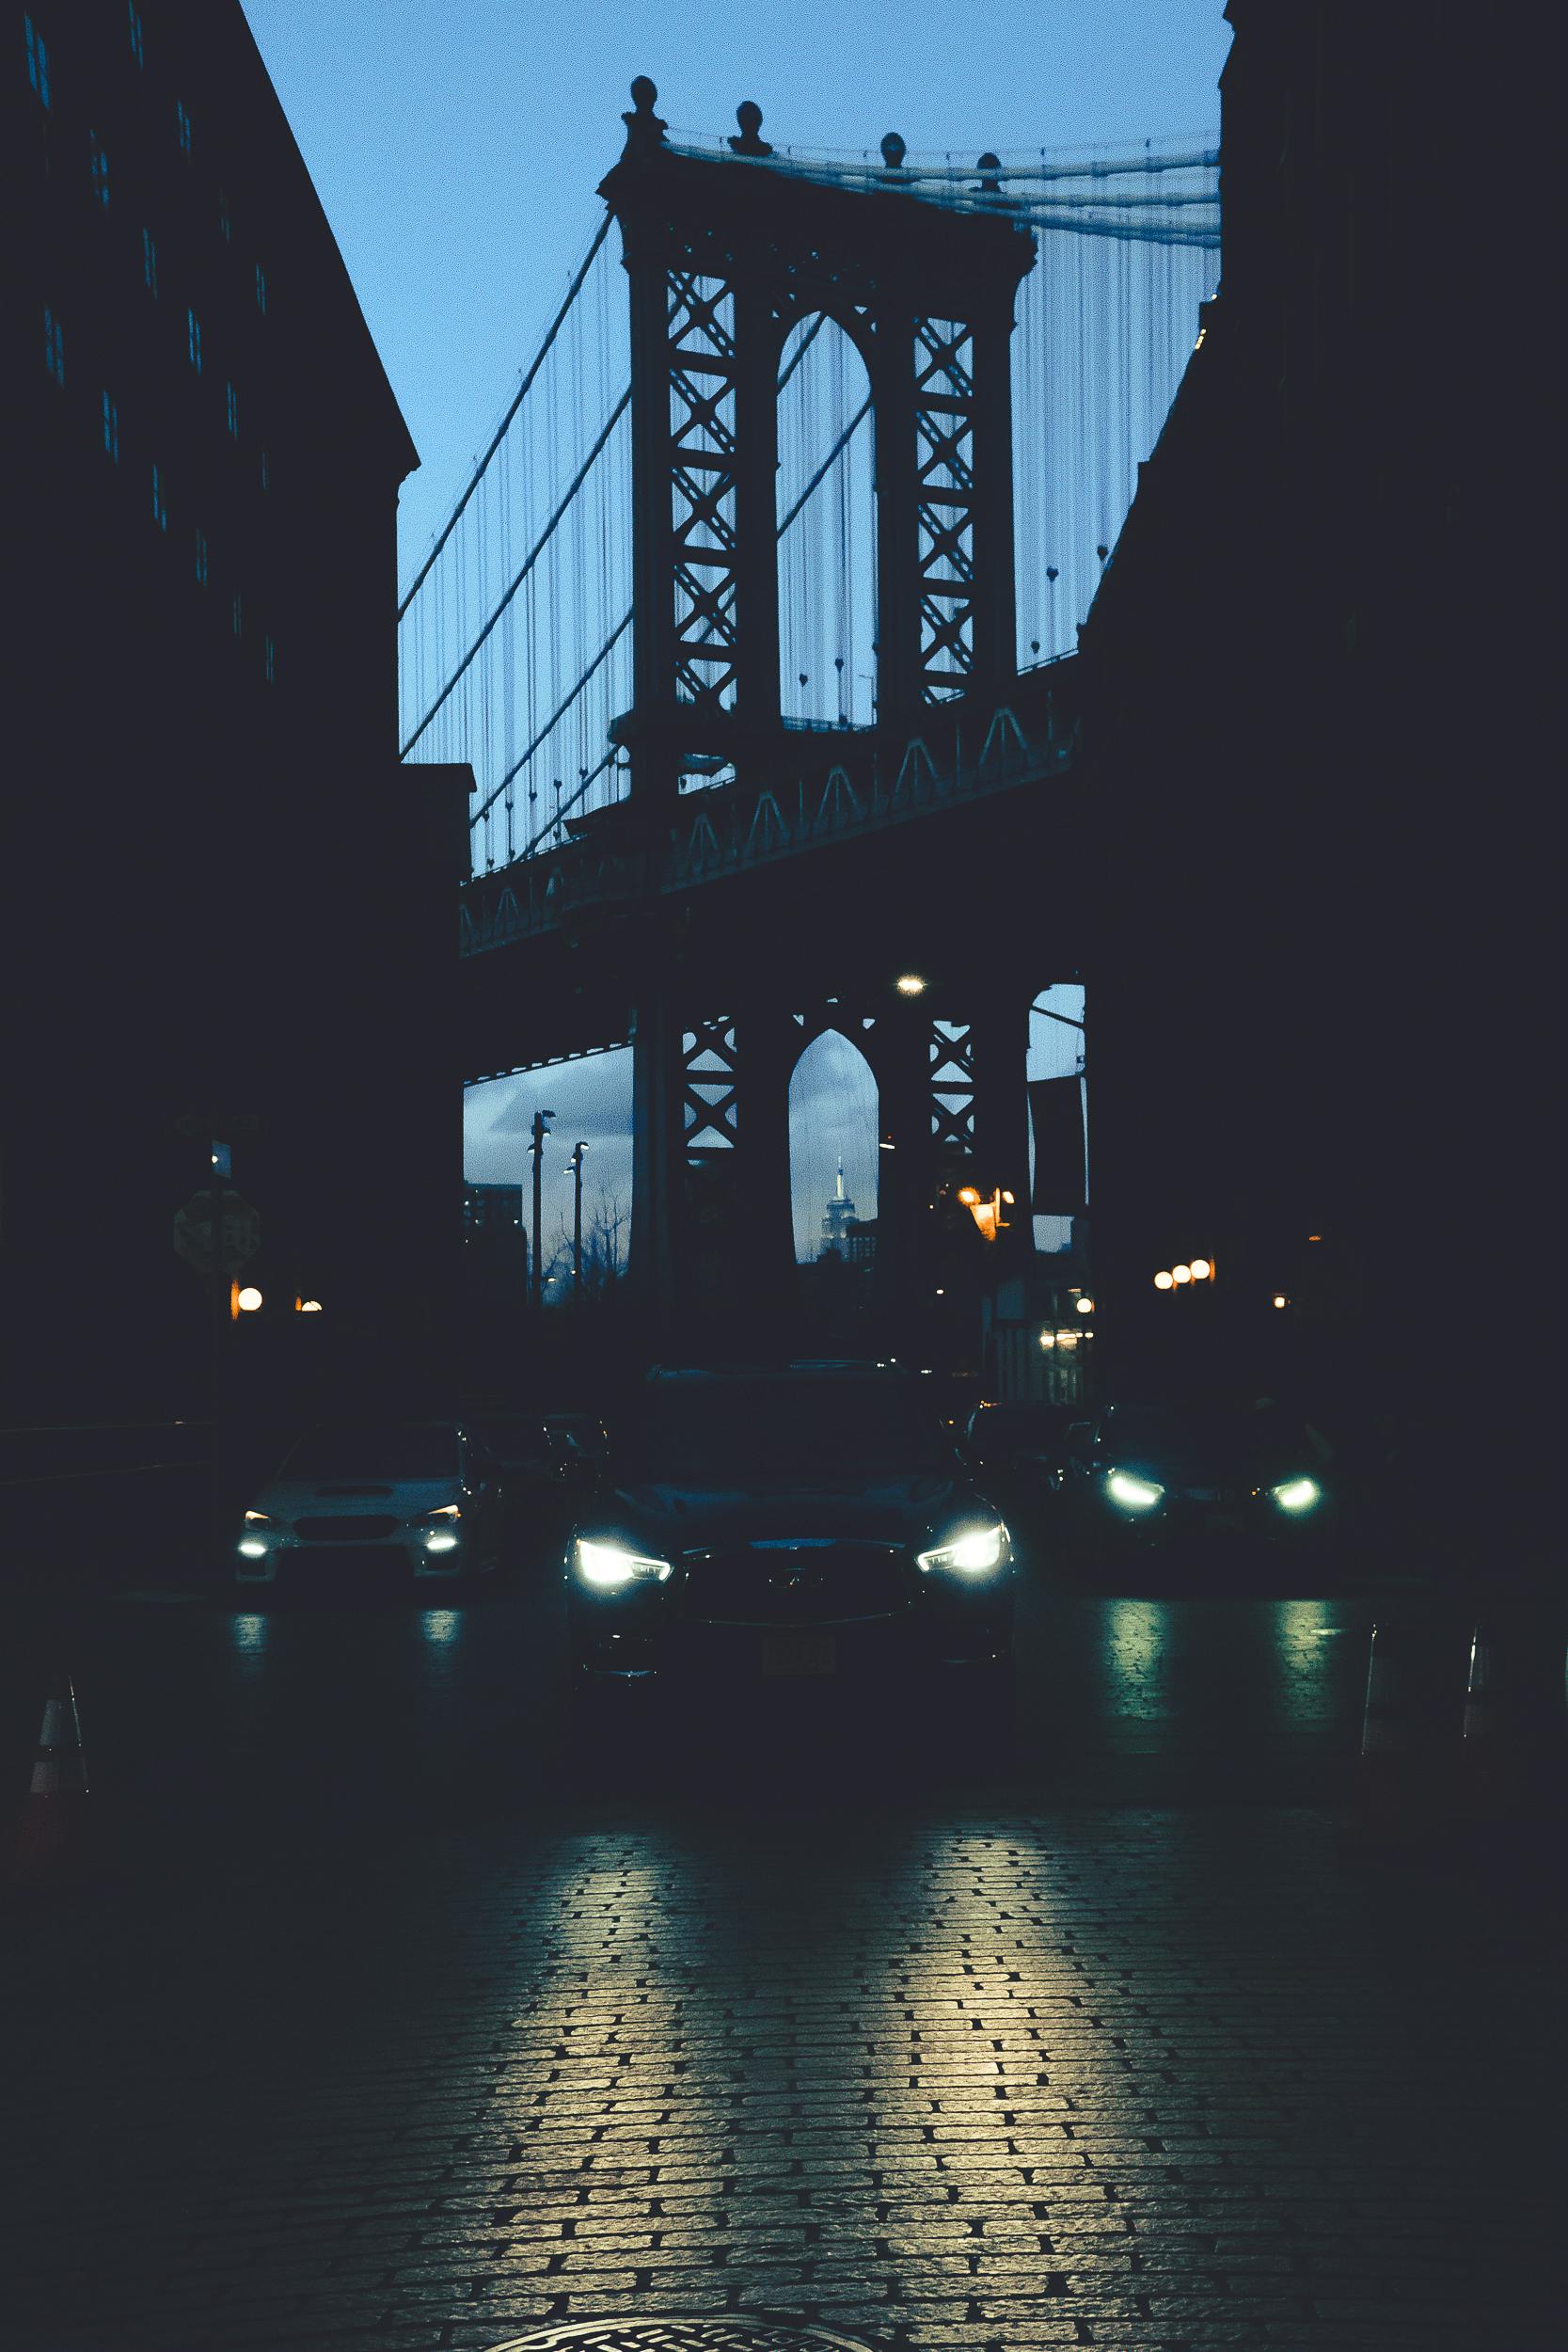 Car Headlight Silhouette Photos, Download The BEST Free Car Headlight ...